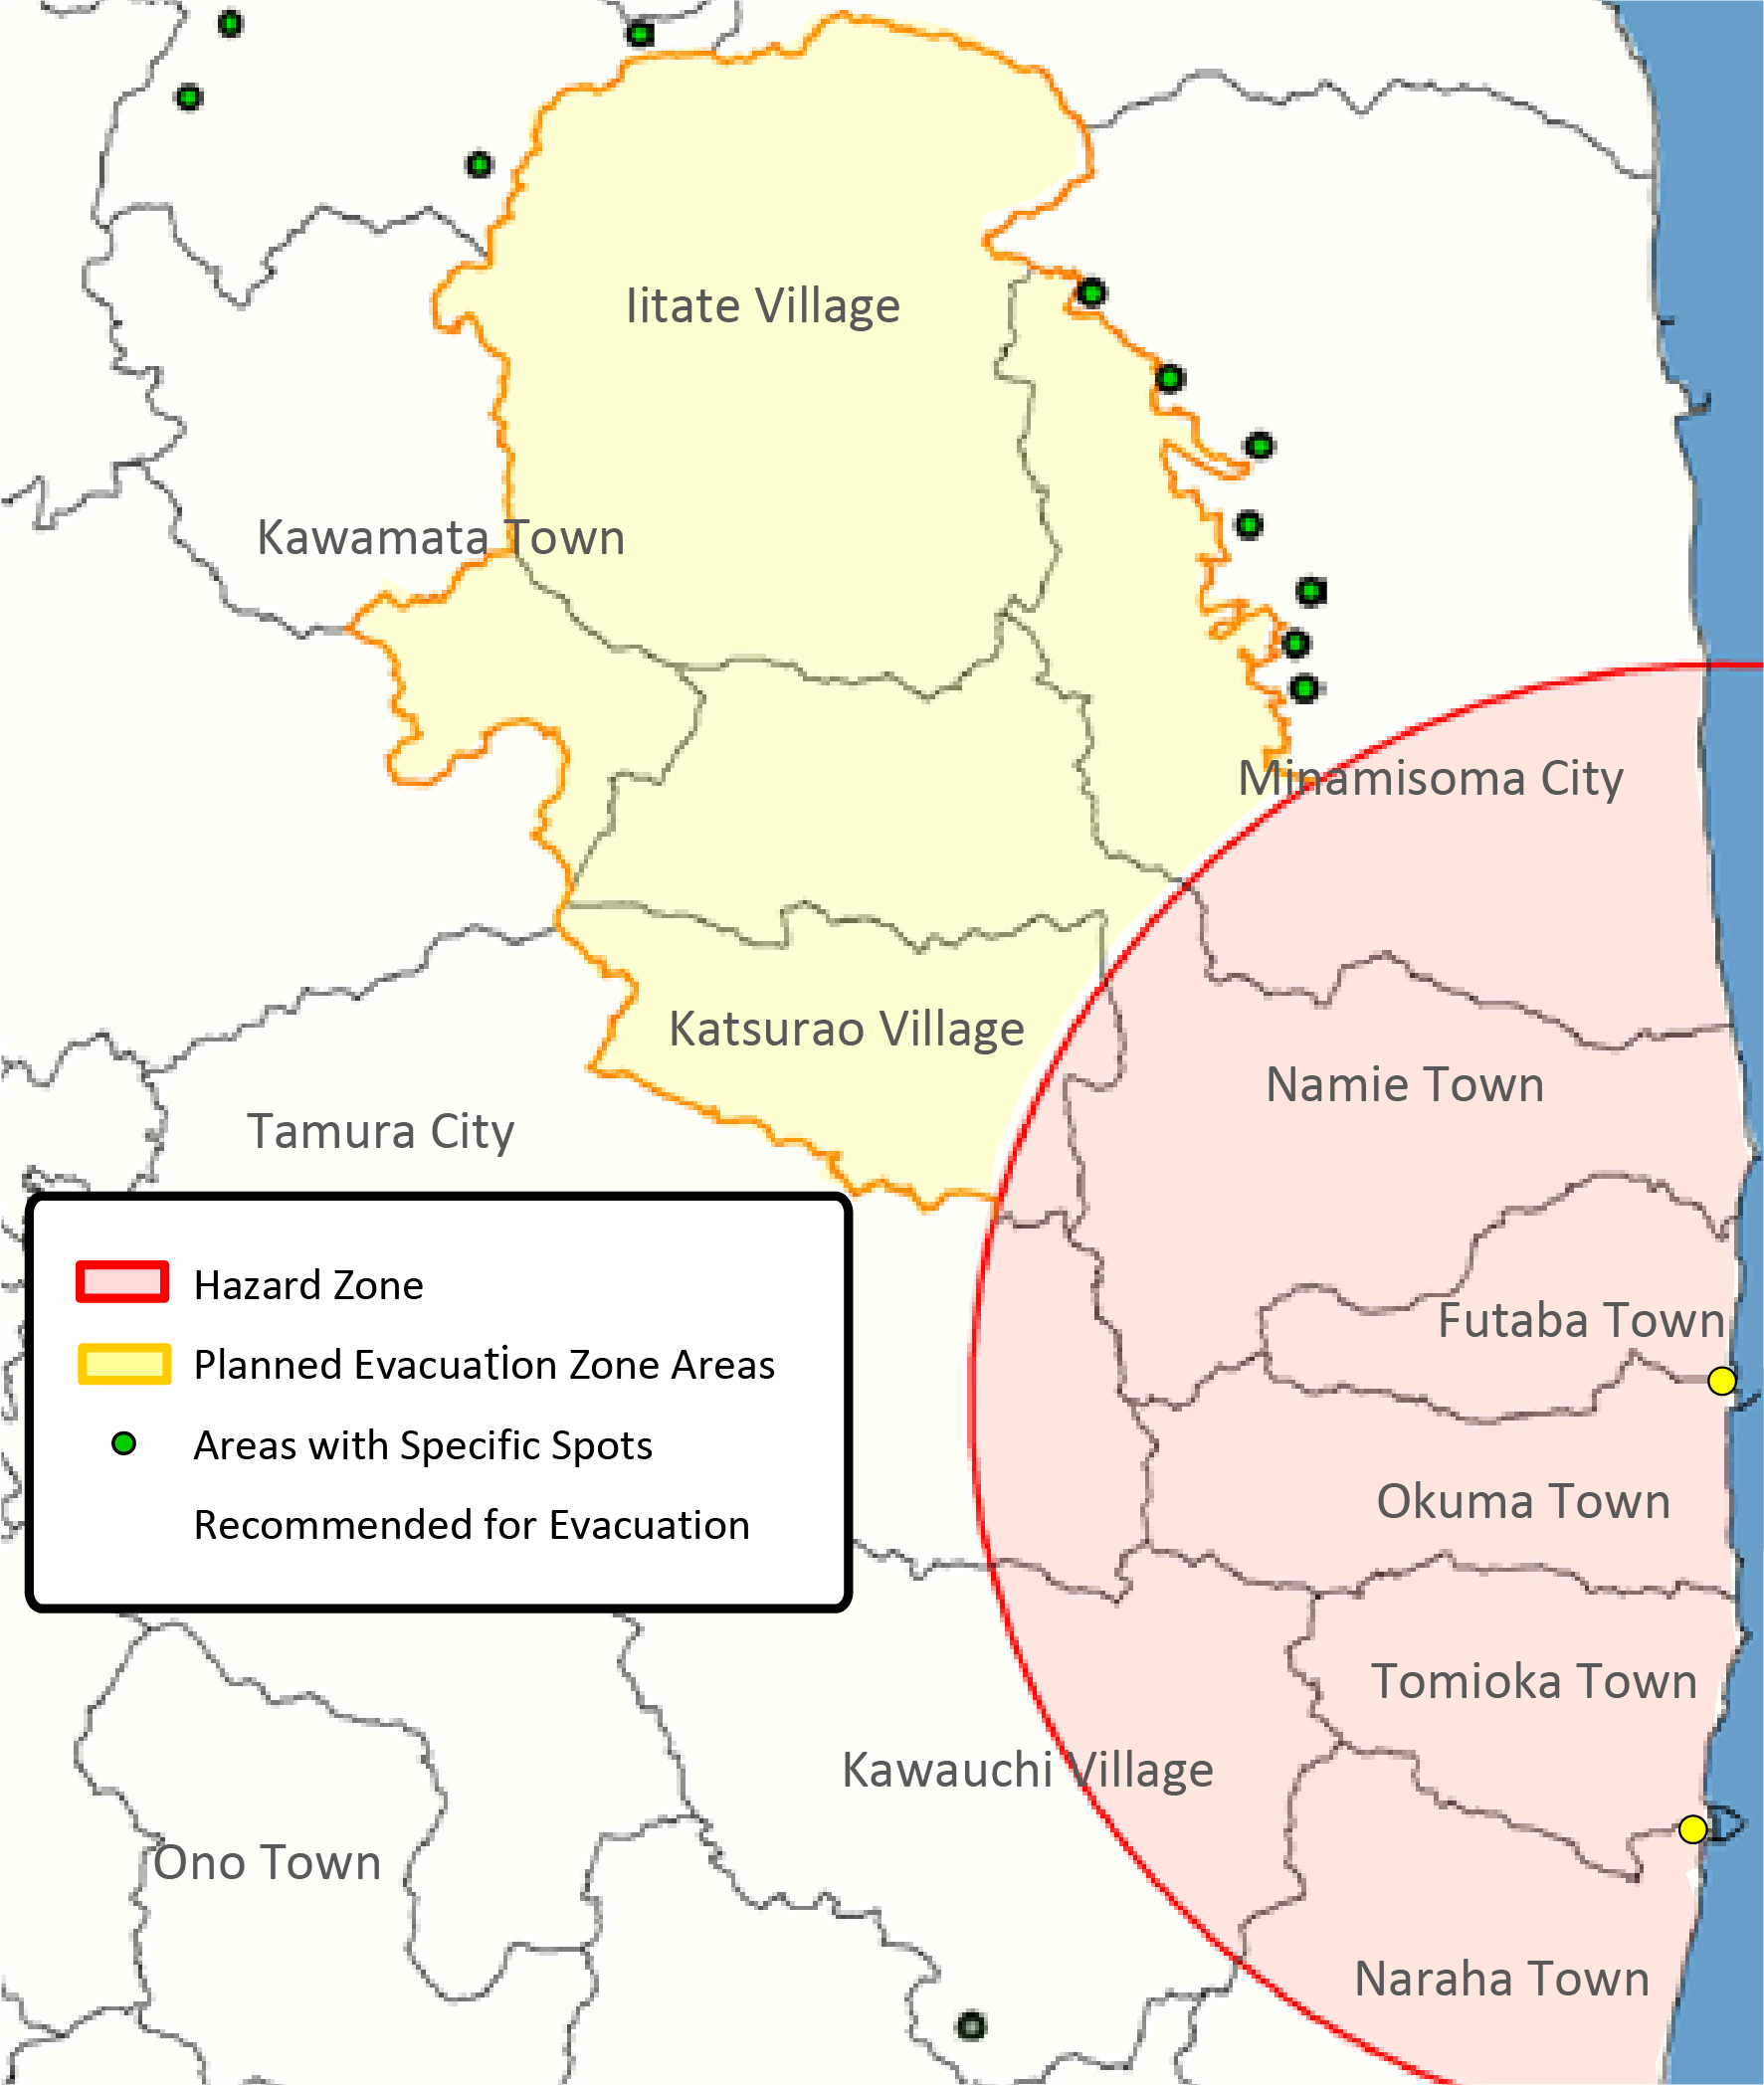 Status of evacuation zones (as of September 30, 2011)1